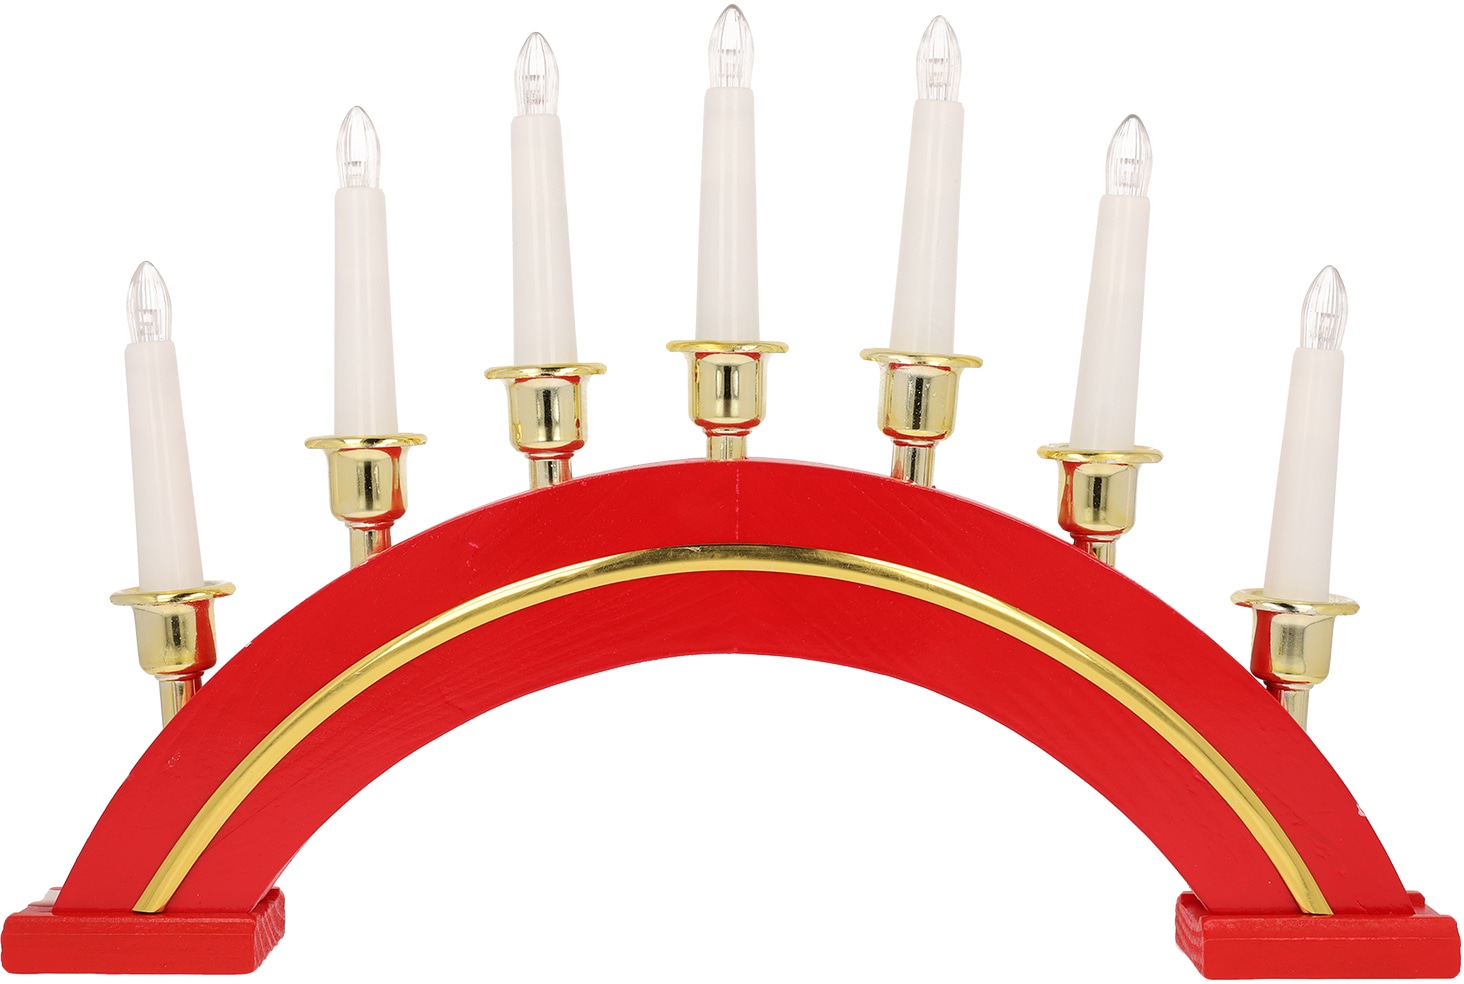 LED Dekoobjekt, Kerzenbrücke mit 7 LED Kerzen, Höhe ca. 27 cm, Weihnachtsdeko rot